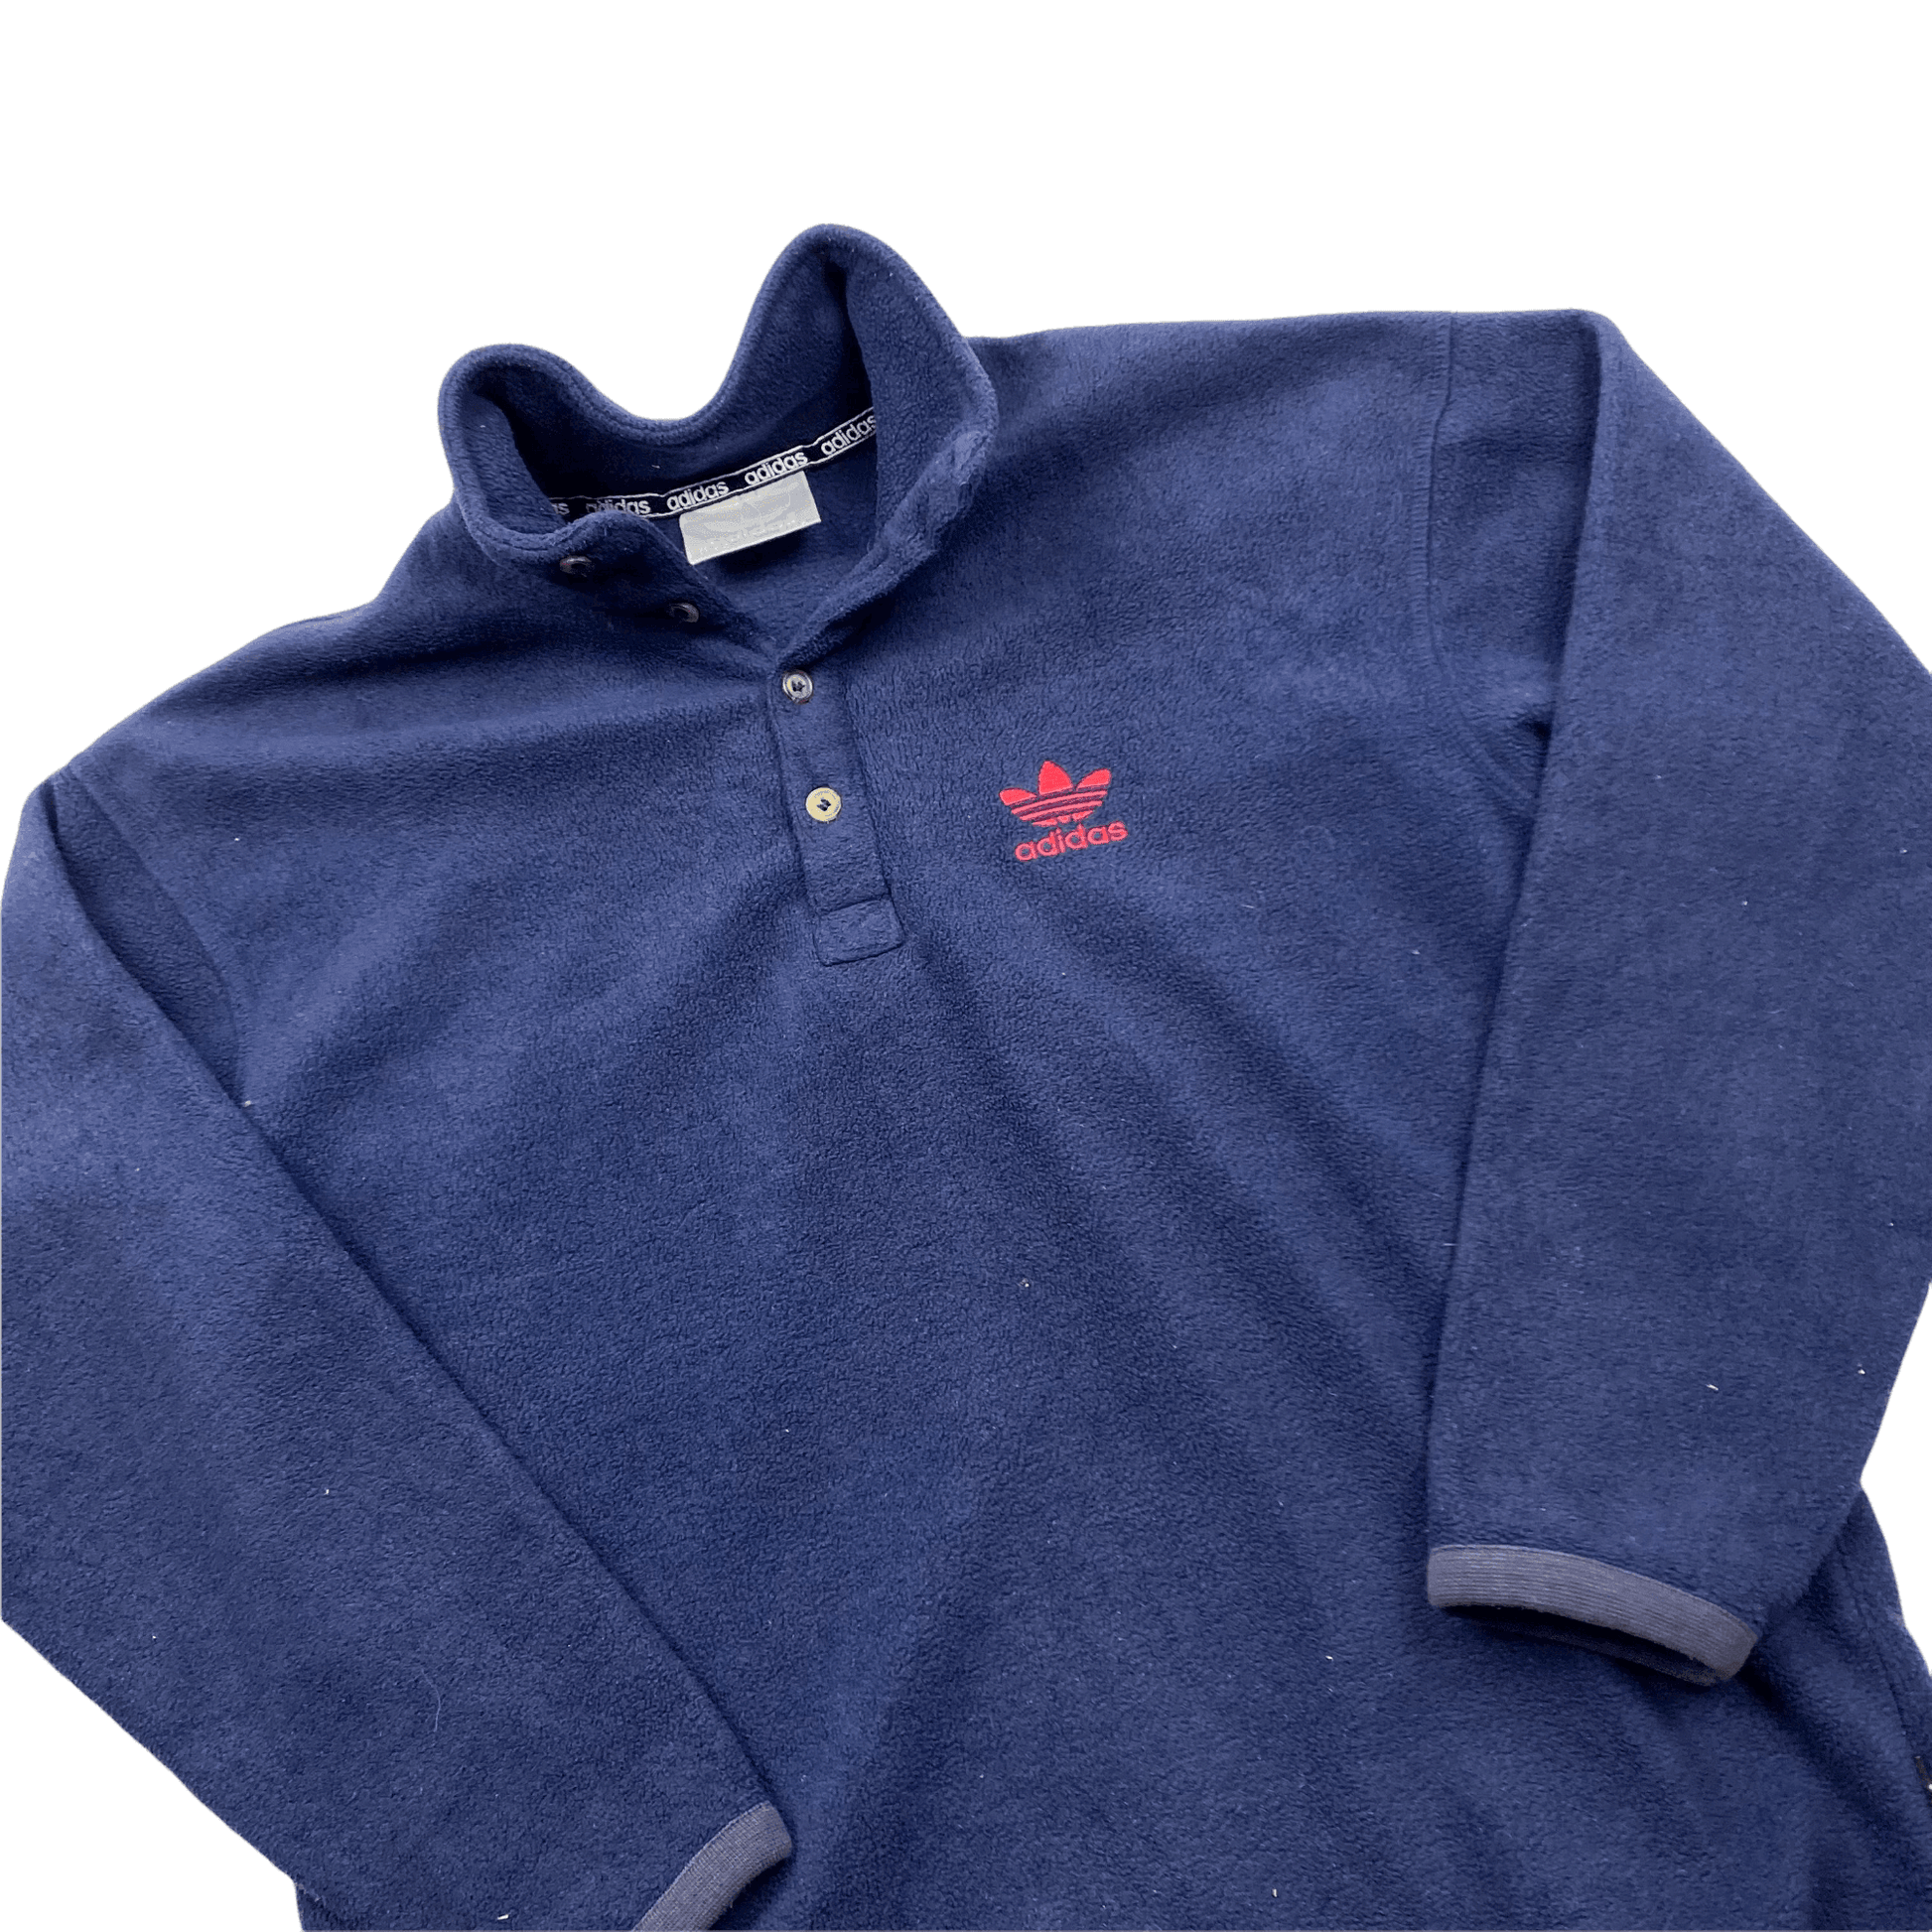 Vintage 90s Navy Blue Adidas Spell-Out Fleece Sweatshirt - Small - The Streetwear Studio